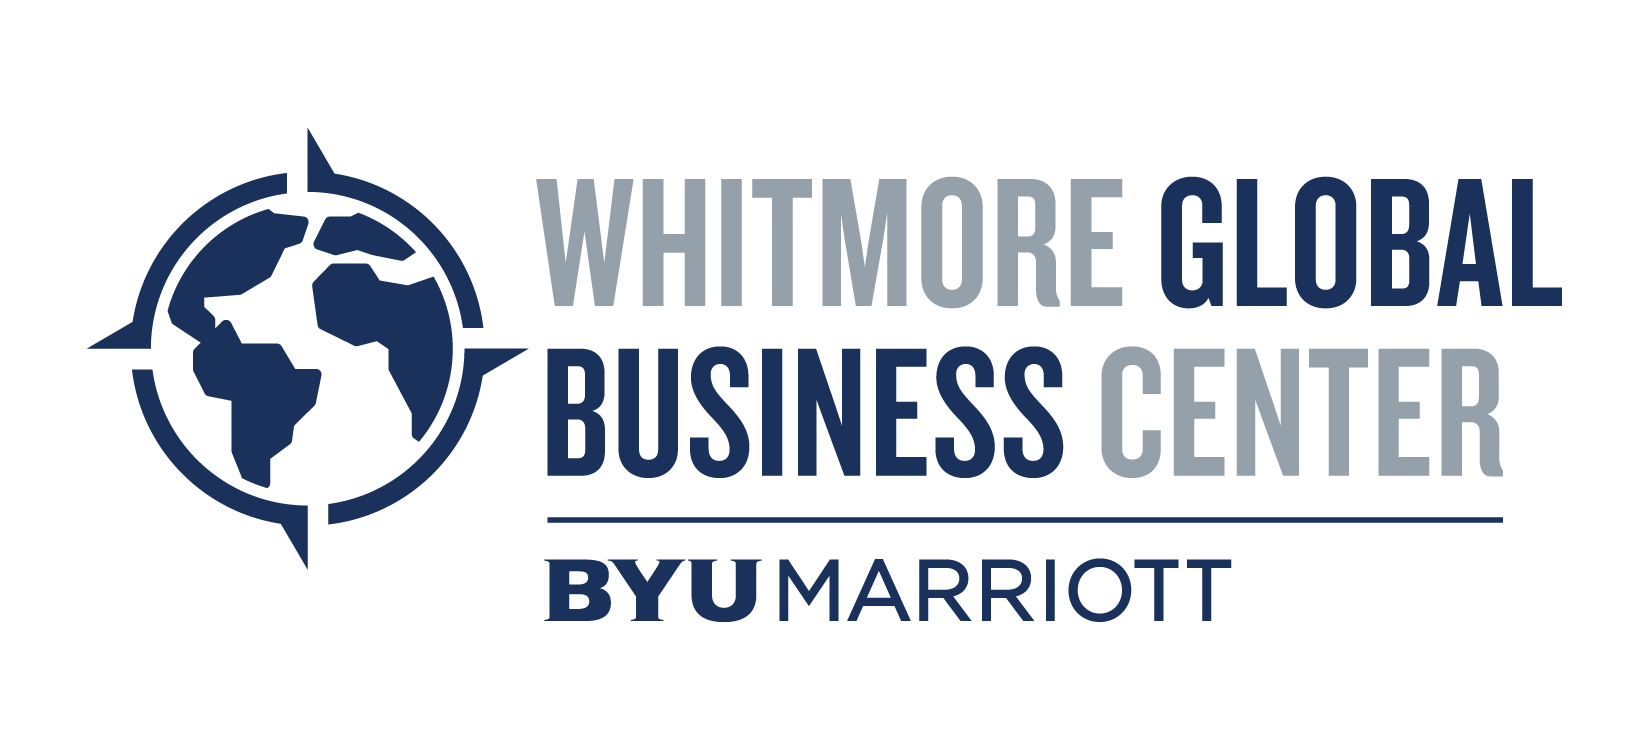 Whitmore Global Business Center | BYU Marriott Logo